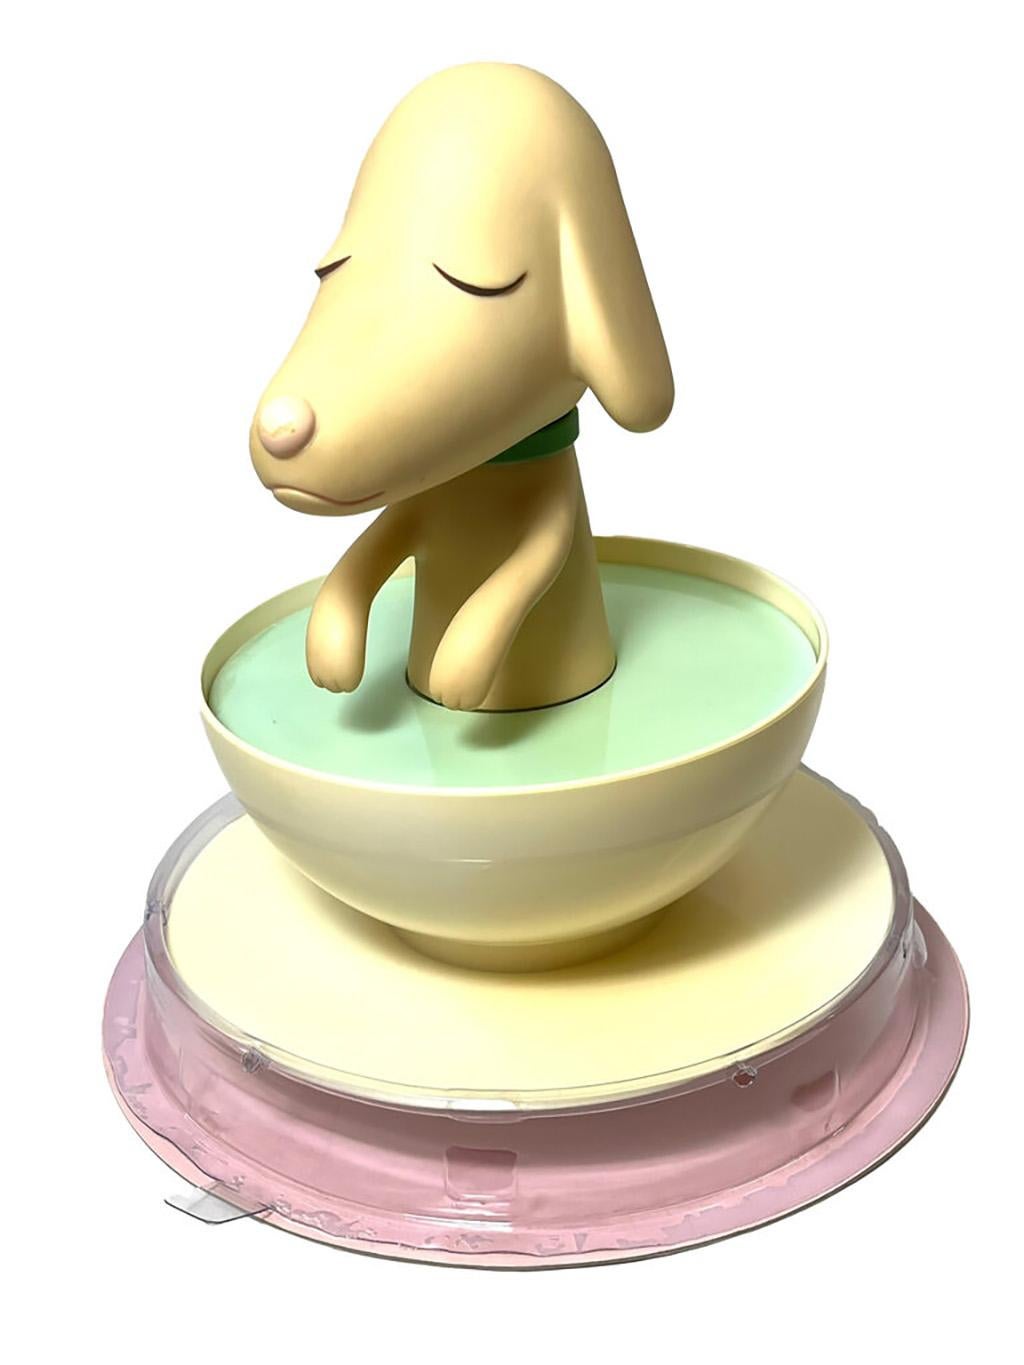 Yoshimoto Pup Cup art toy 2003 (Yoshitomo Nara Pup Cup 2003) For Sale 3